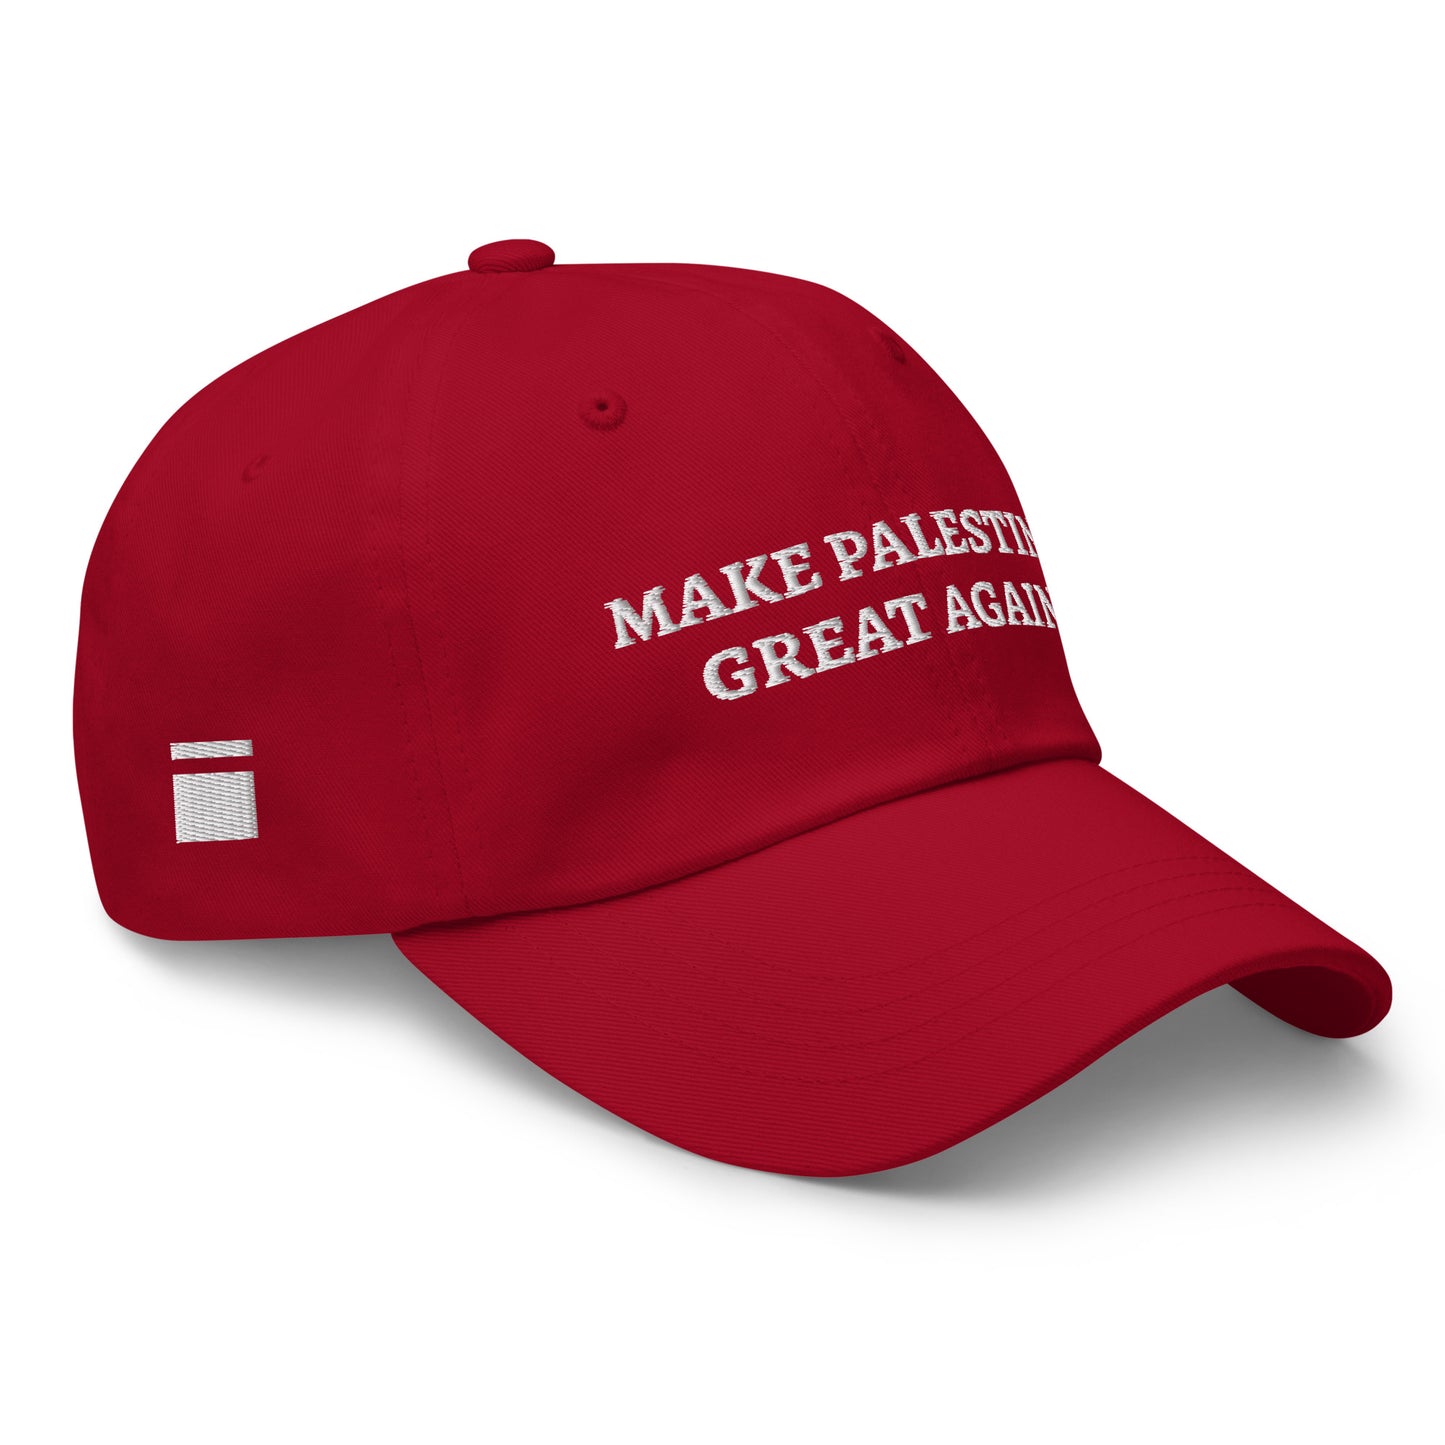 Make Palestine Great Again hat